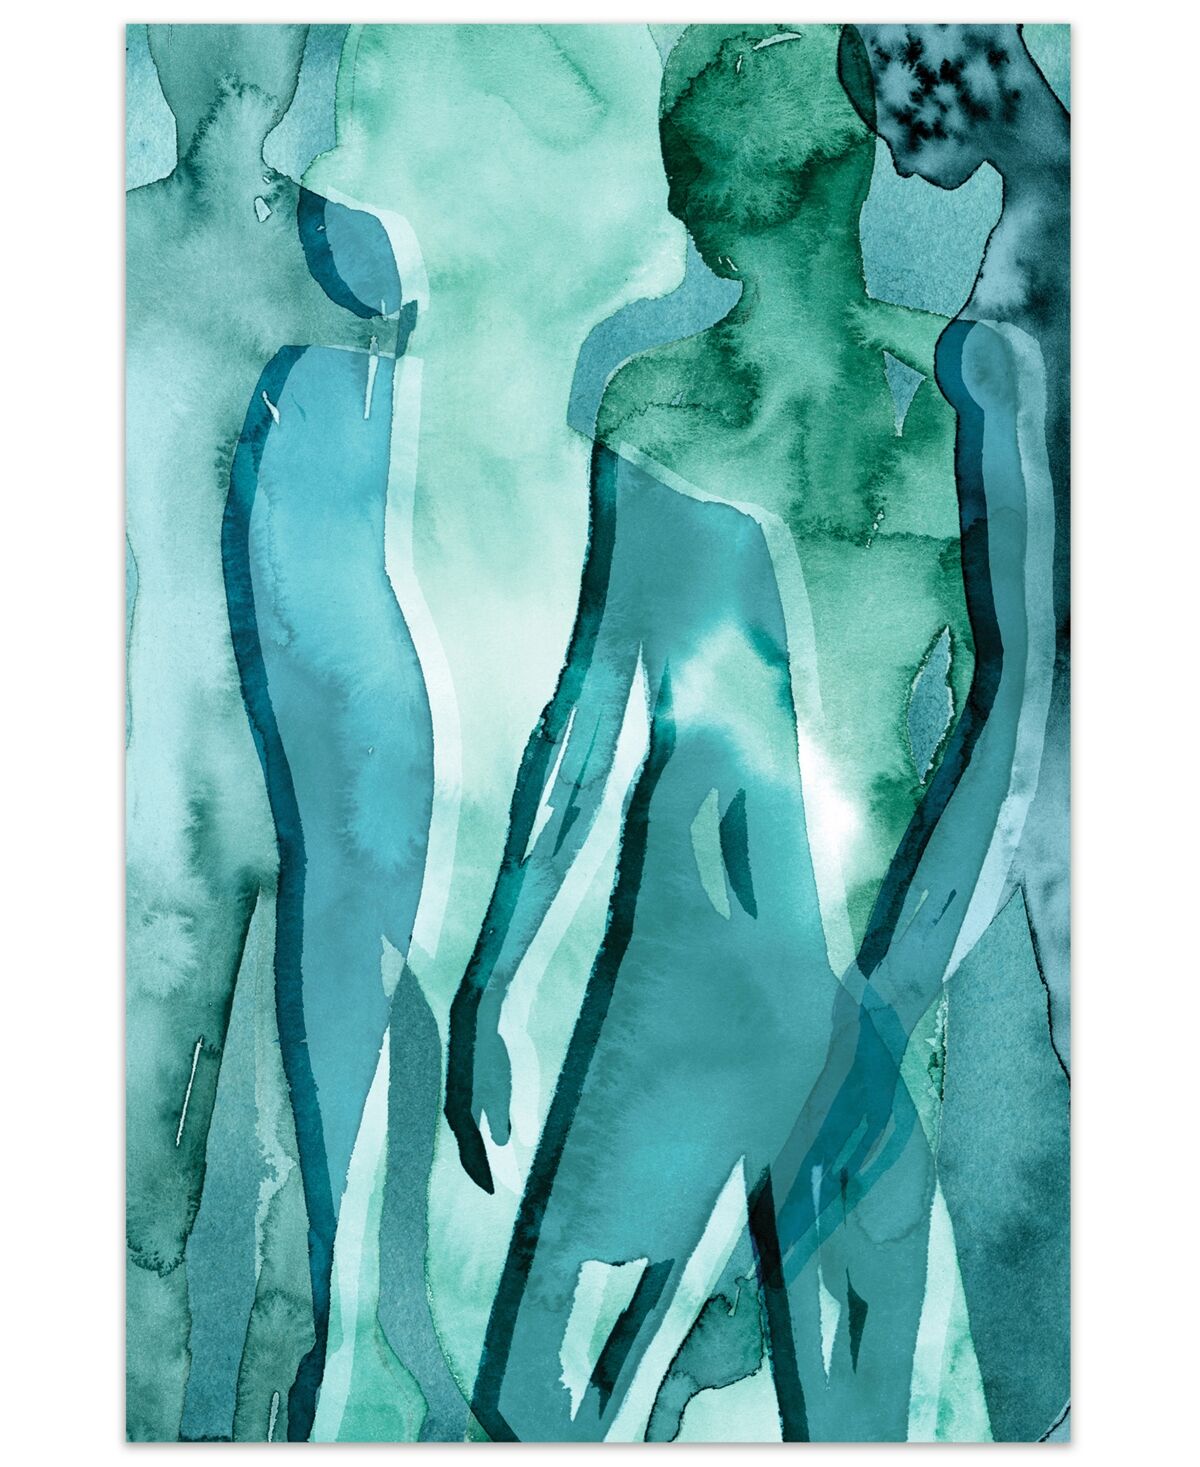 Empire Art Direct Water Women I Frameless Free Floating Tempered Art Glass Wall Art by Ead Art Coop, 48